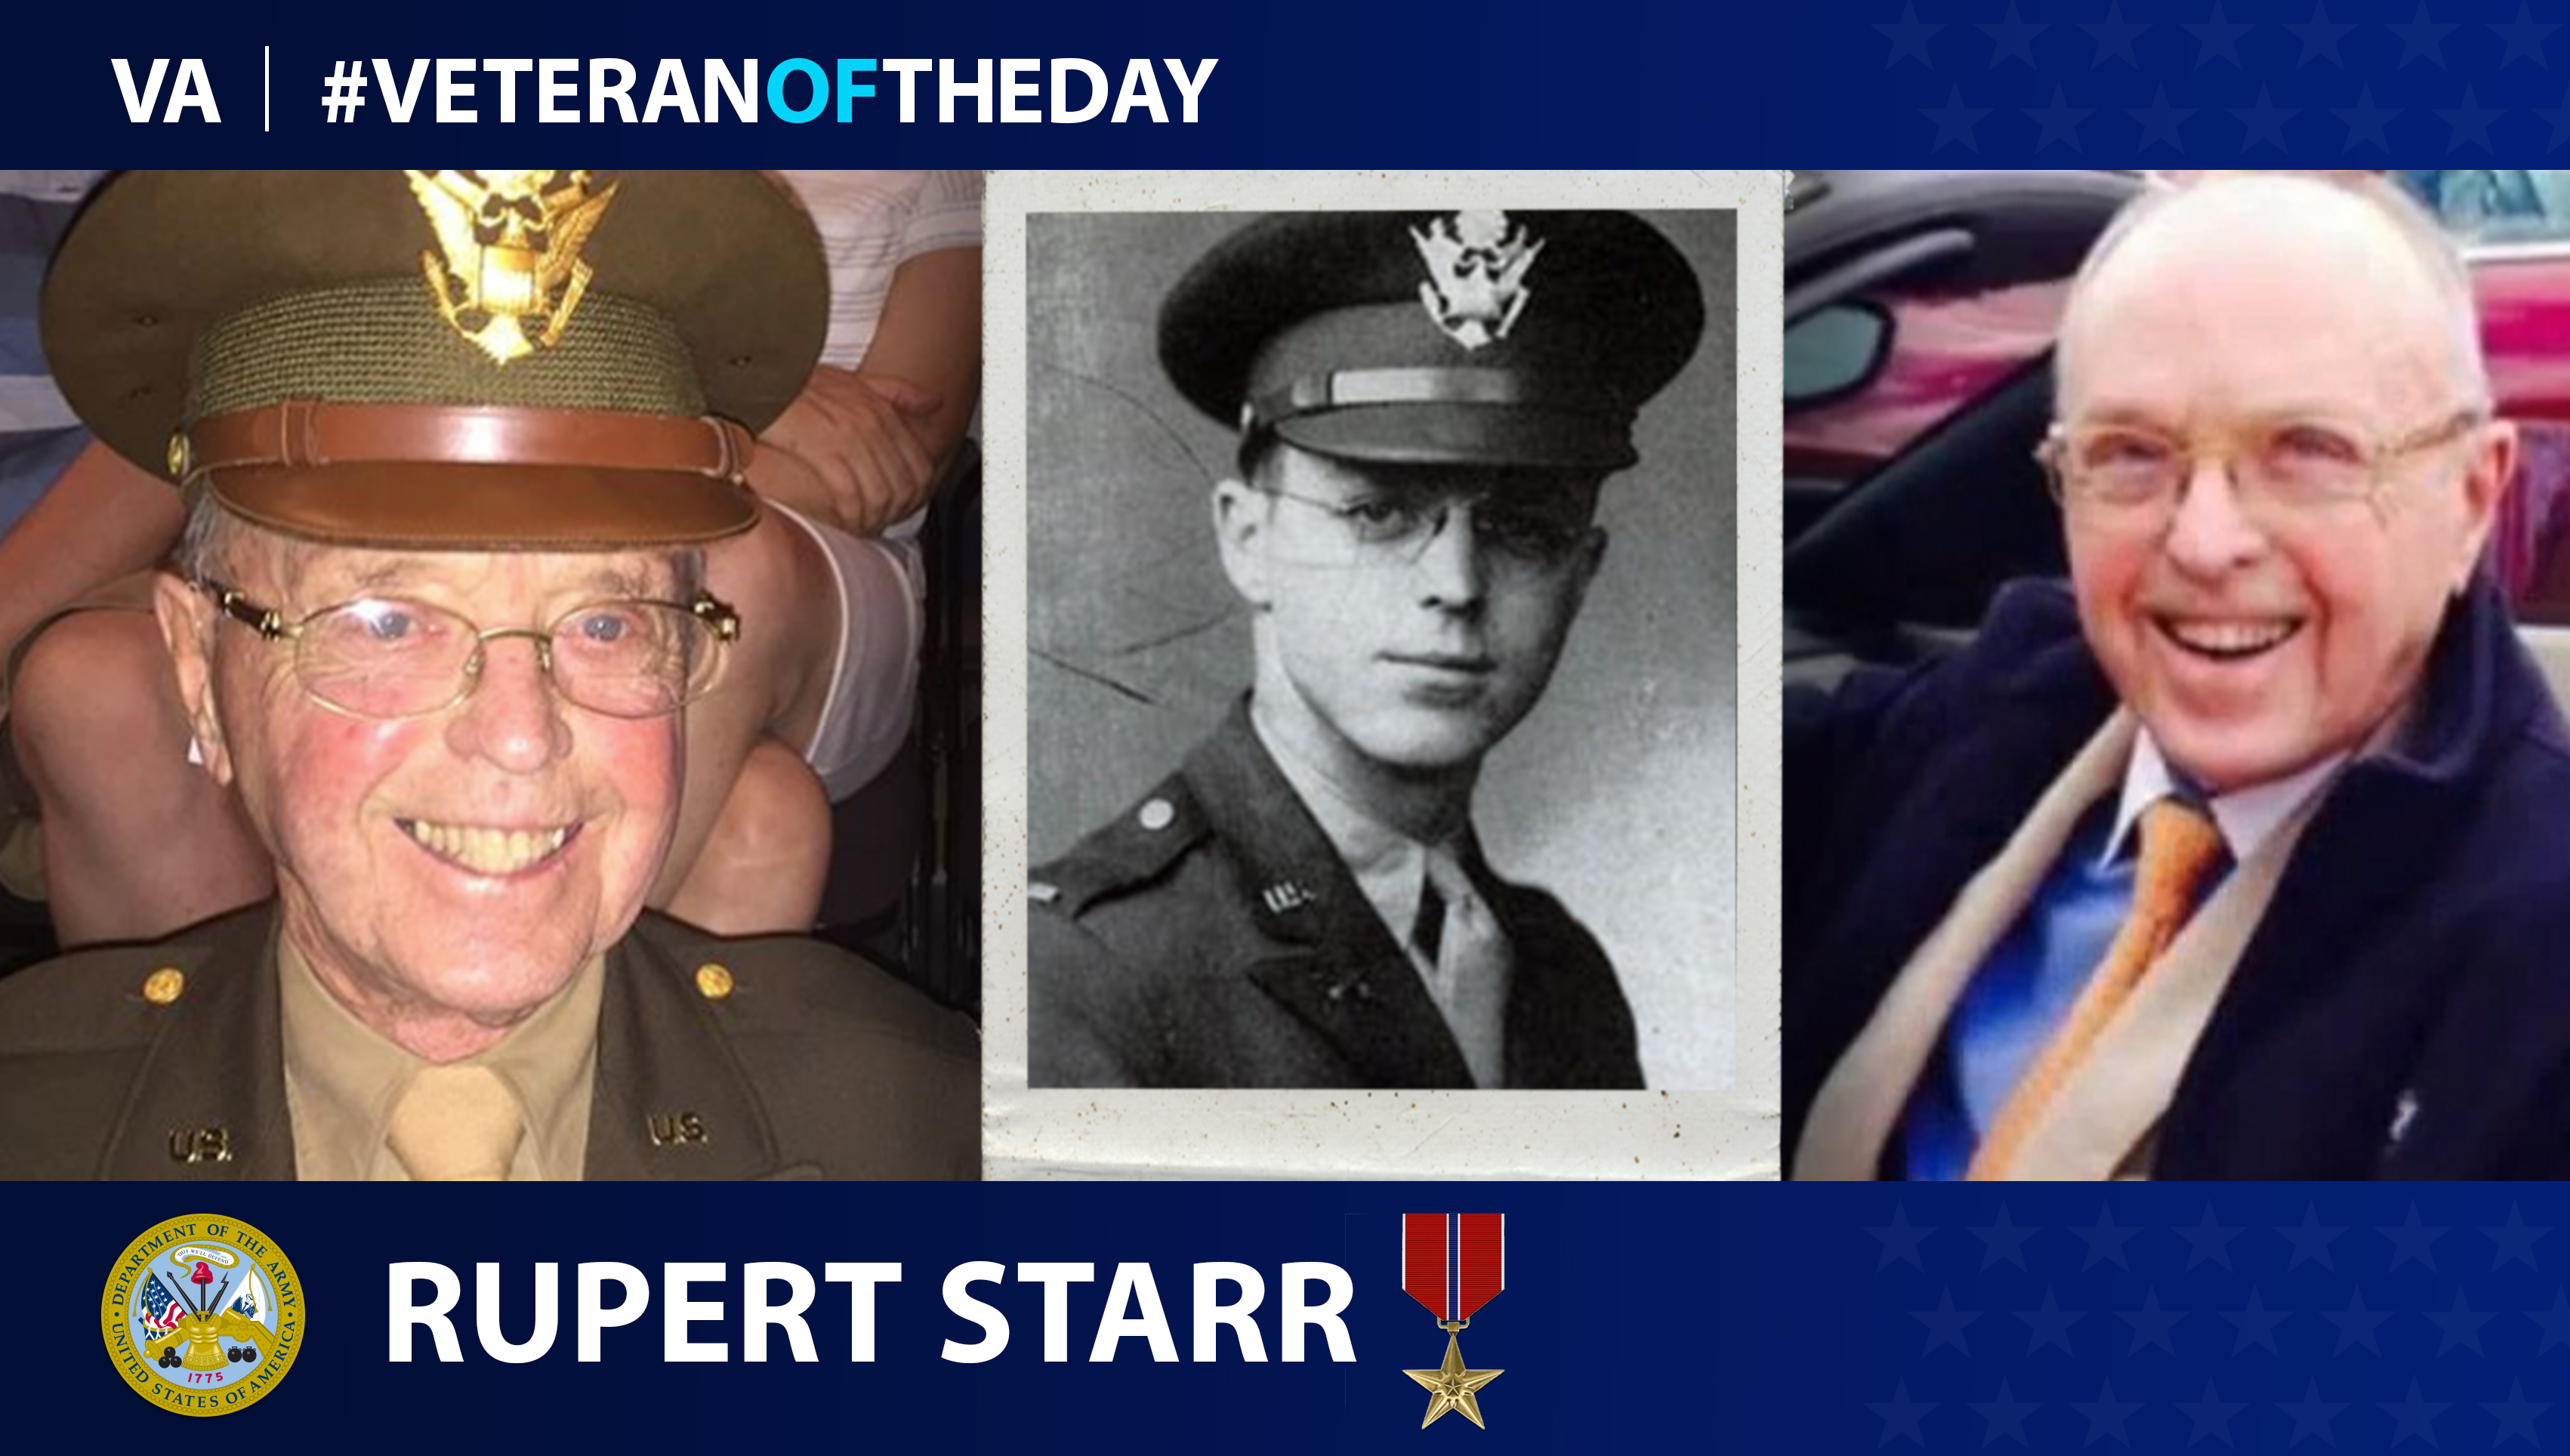 Army Veteran Rupert Starr is today’s #VeteranOfTheDay.